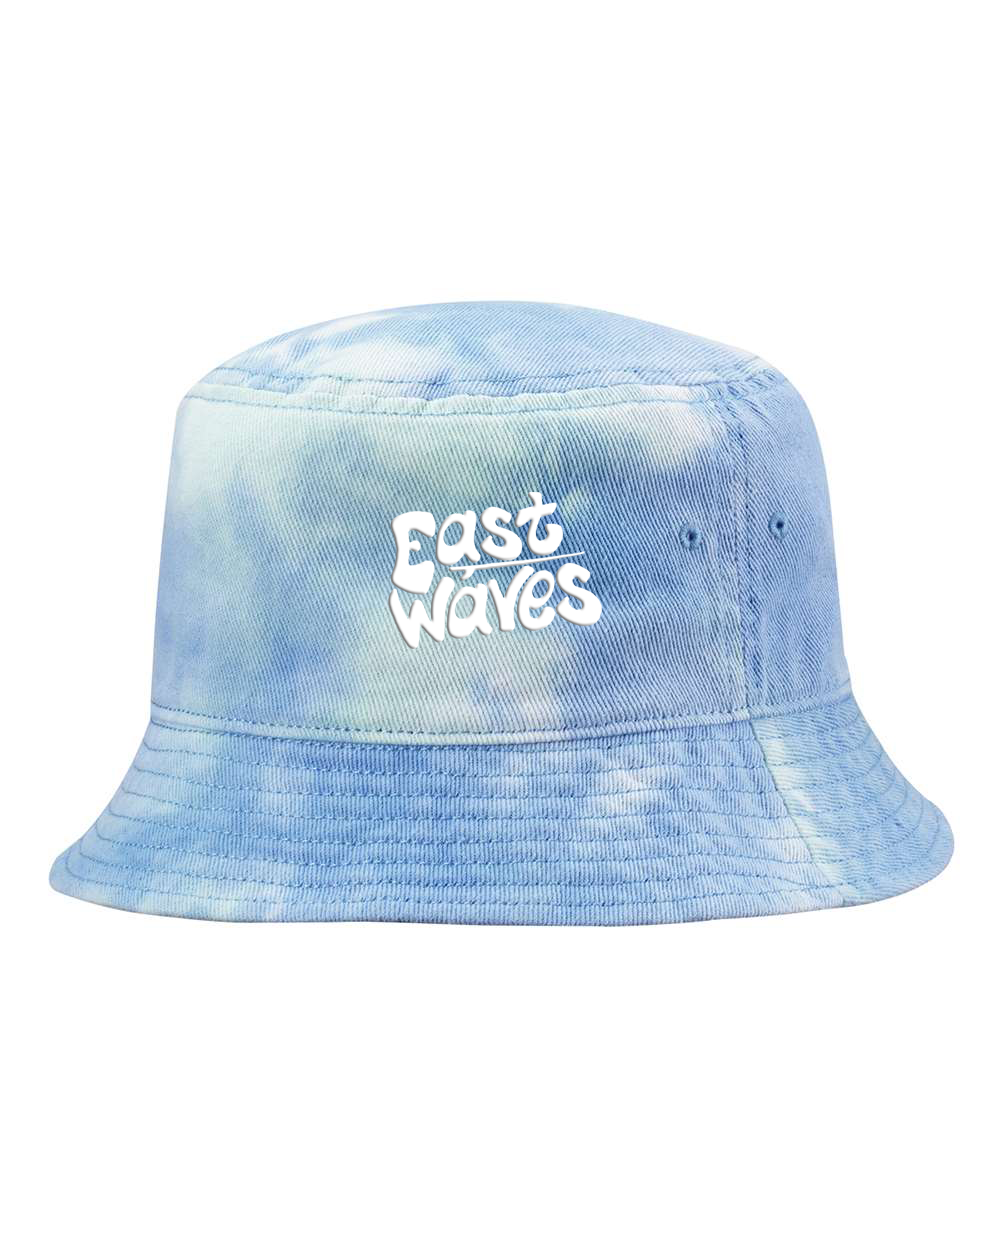 Groovy Bucket Hat – East Waves